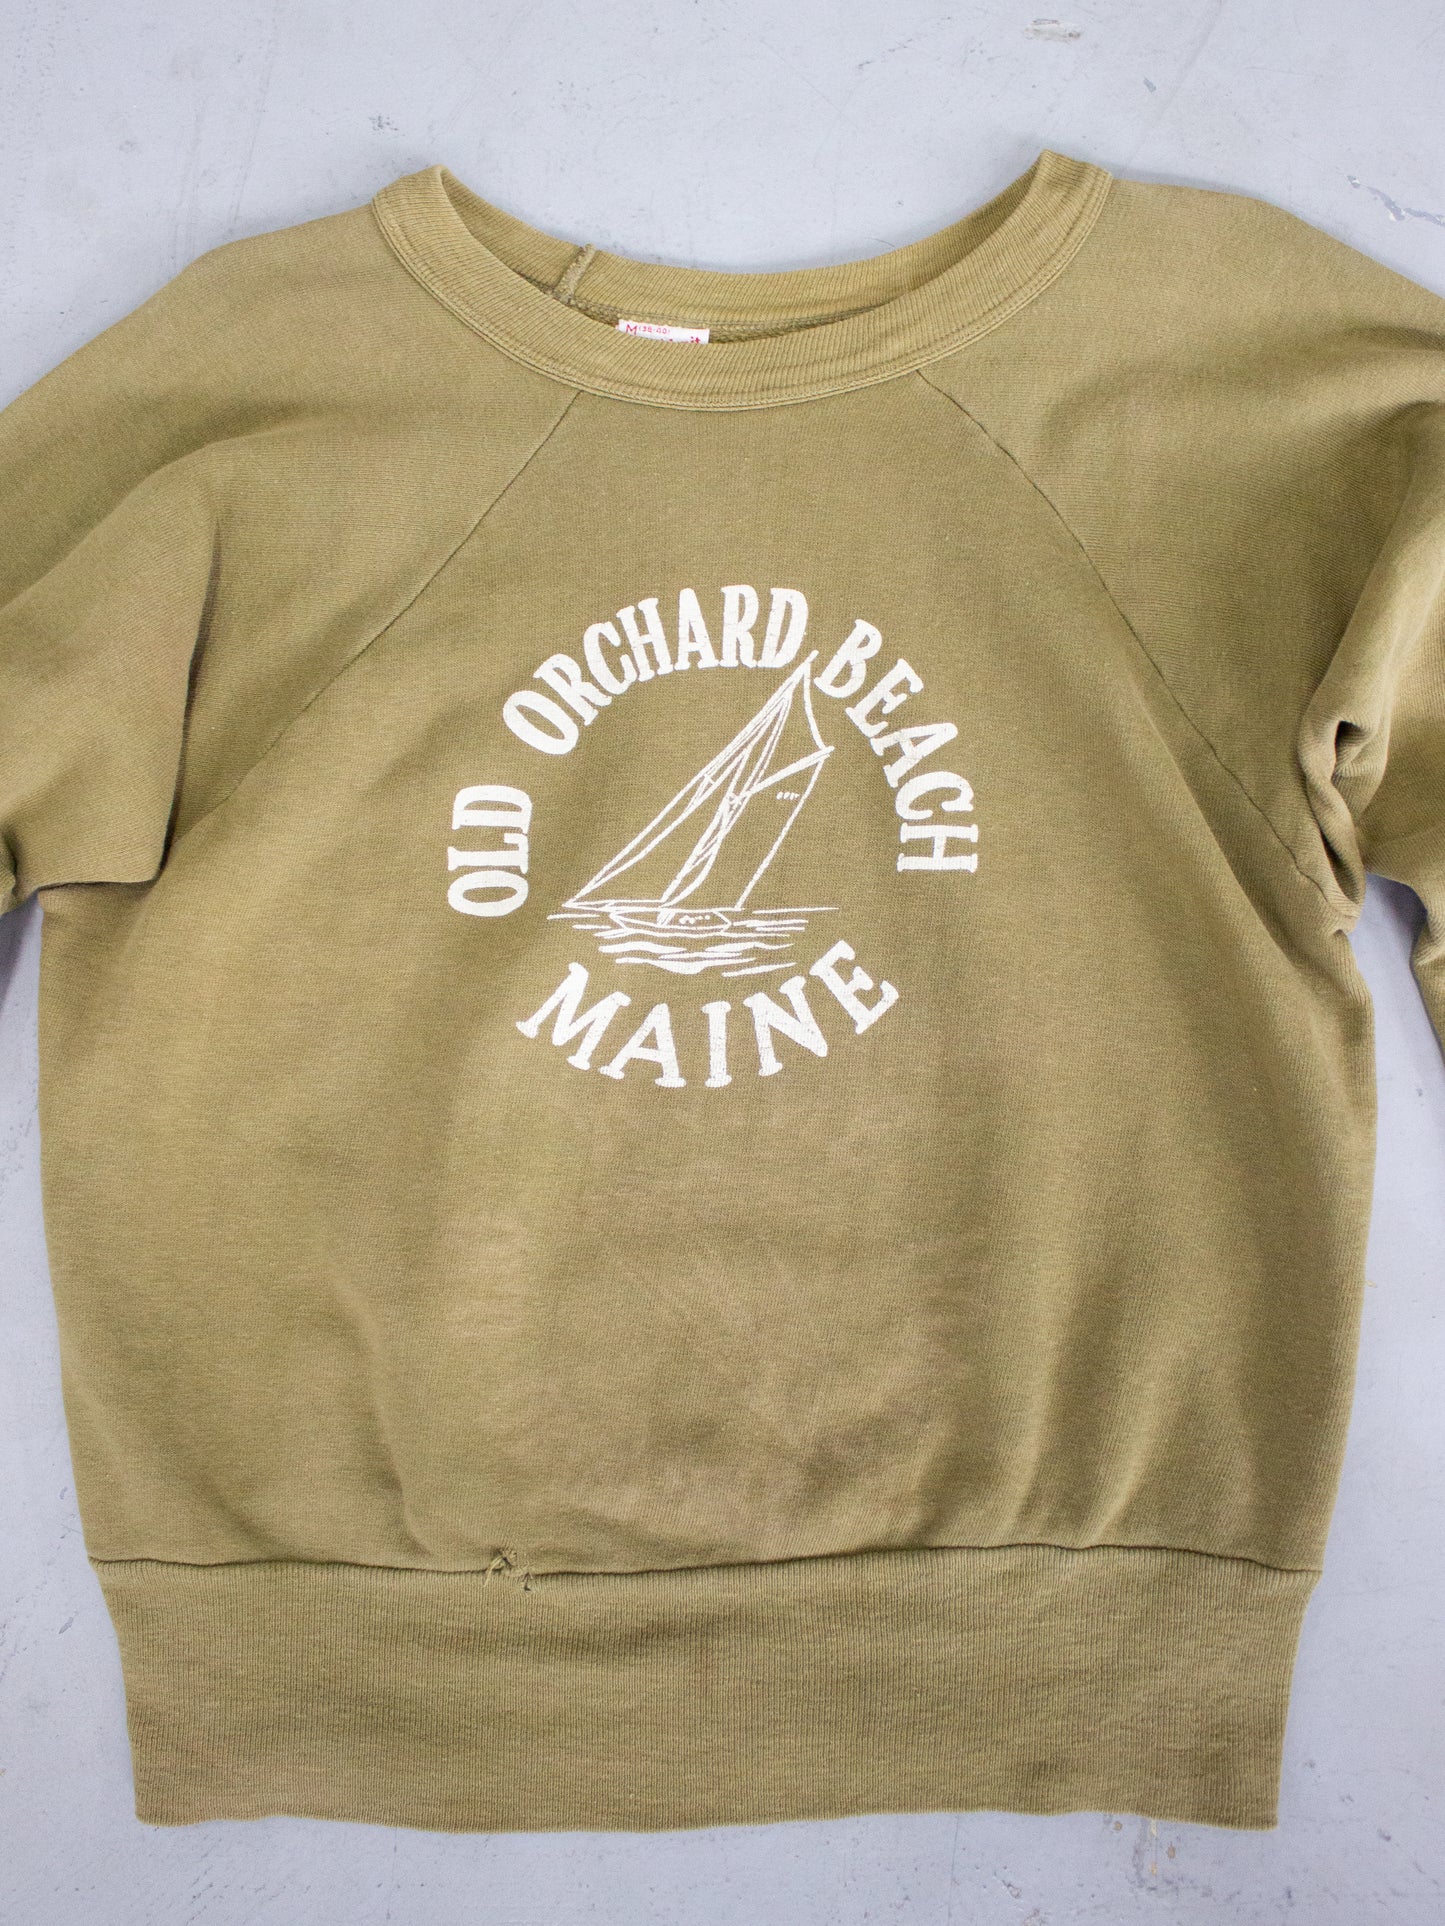 1950's Healthknit Old Orchard Beach Maine Cotton Crewneck (Small)